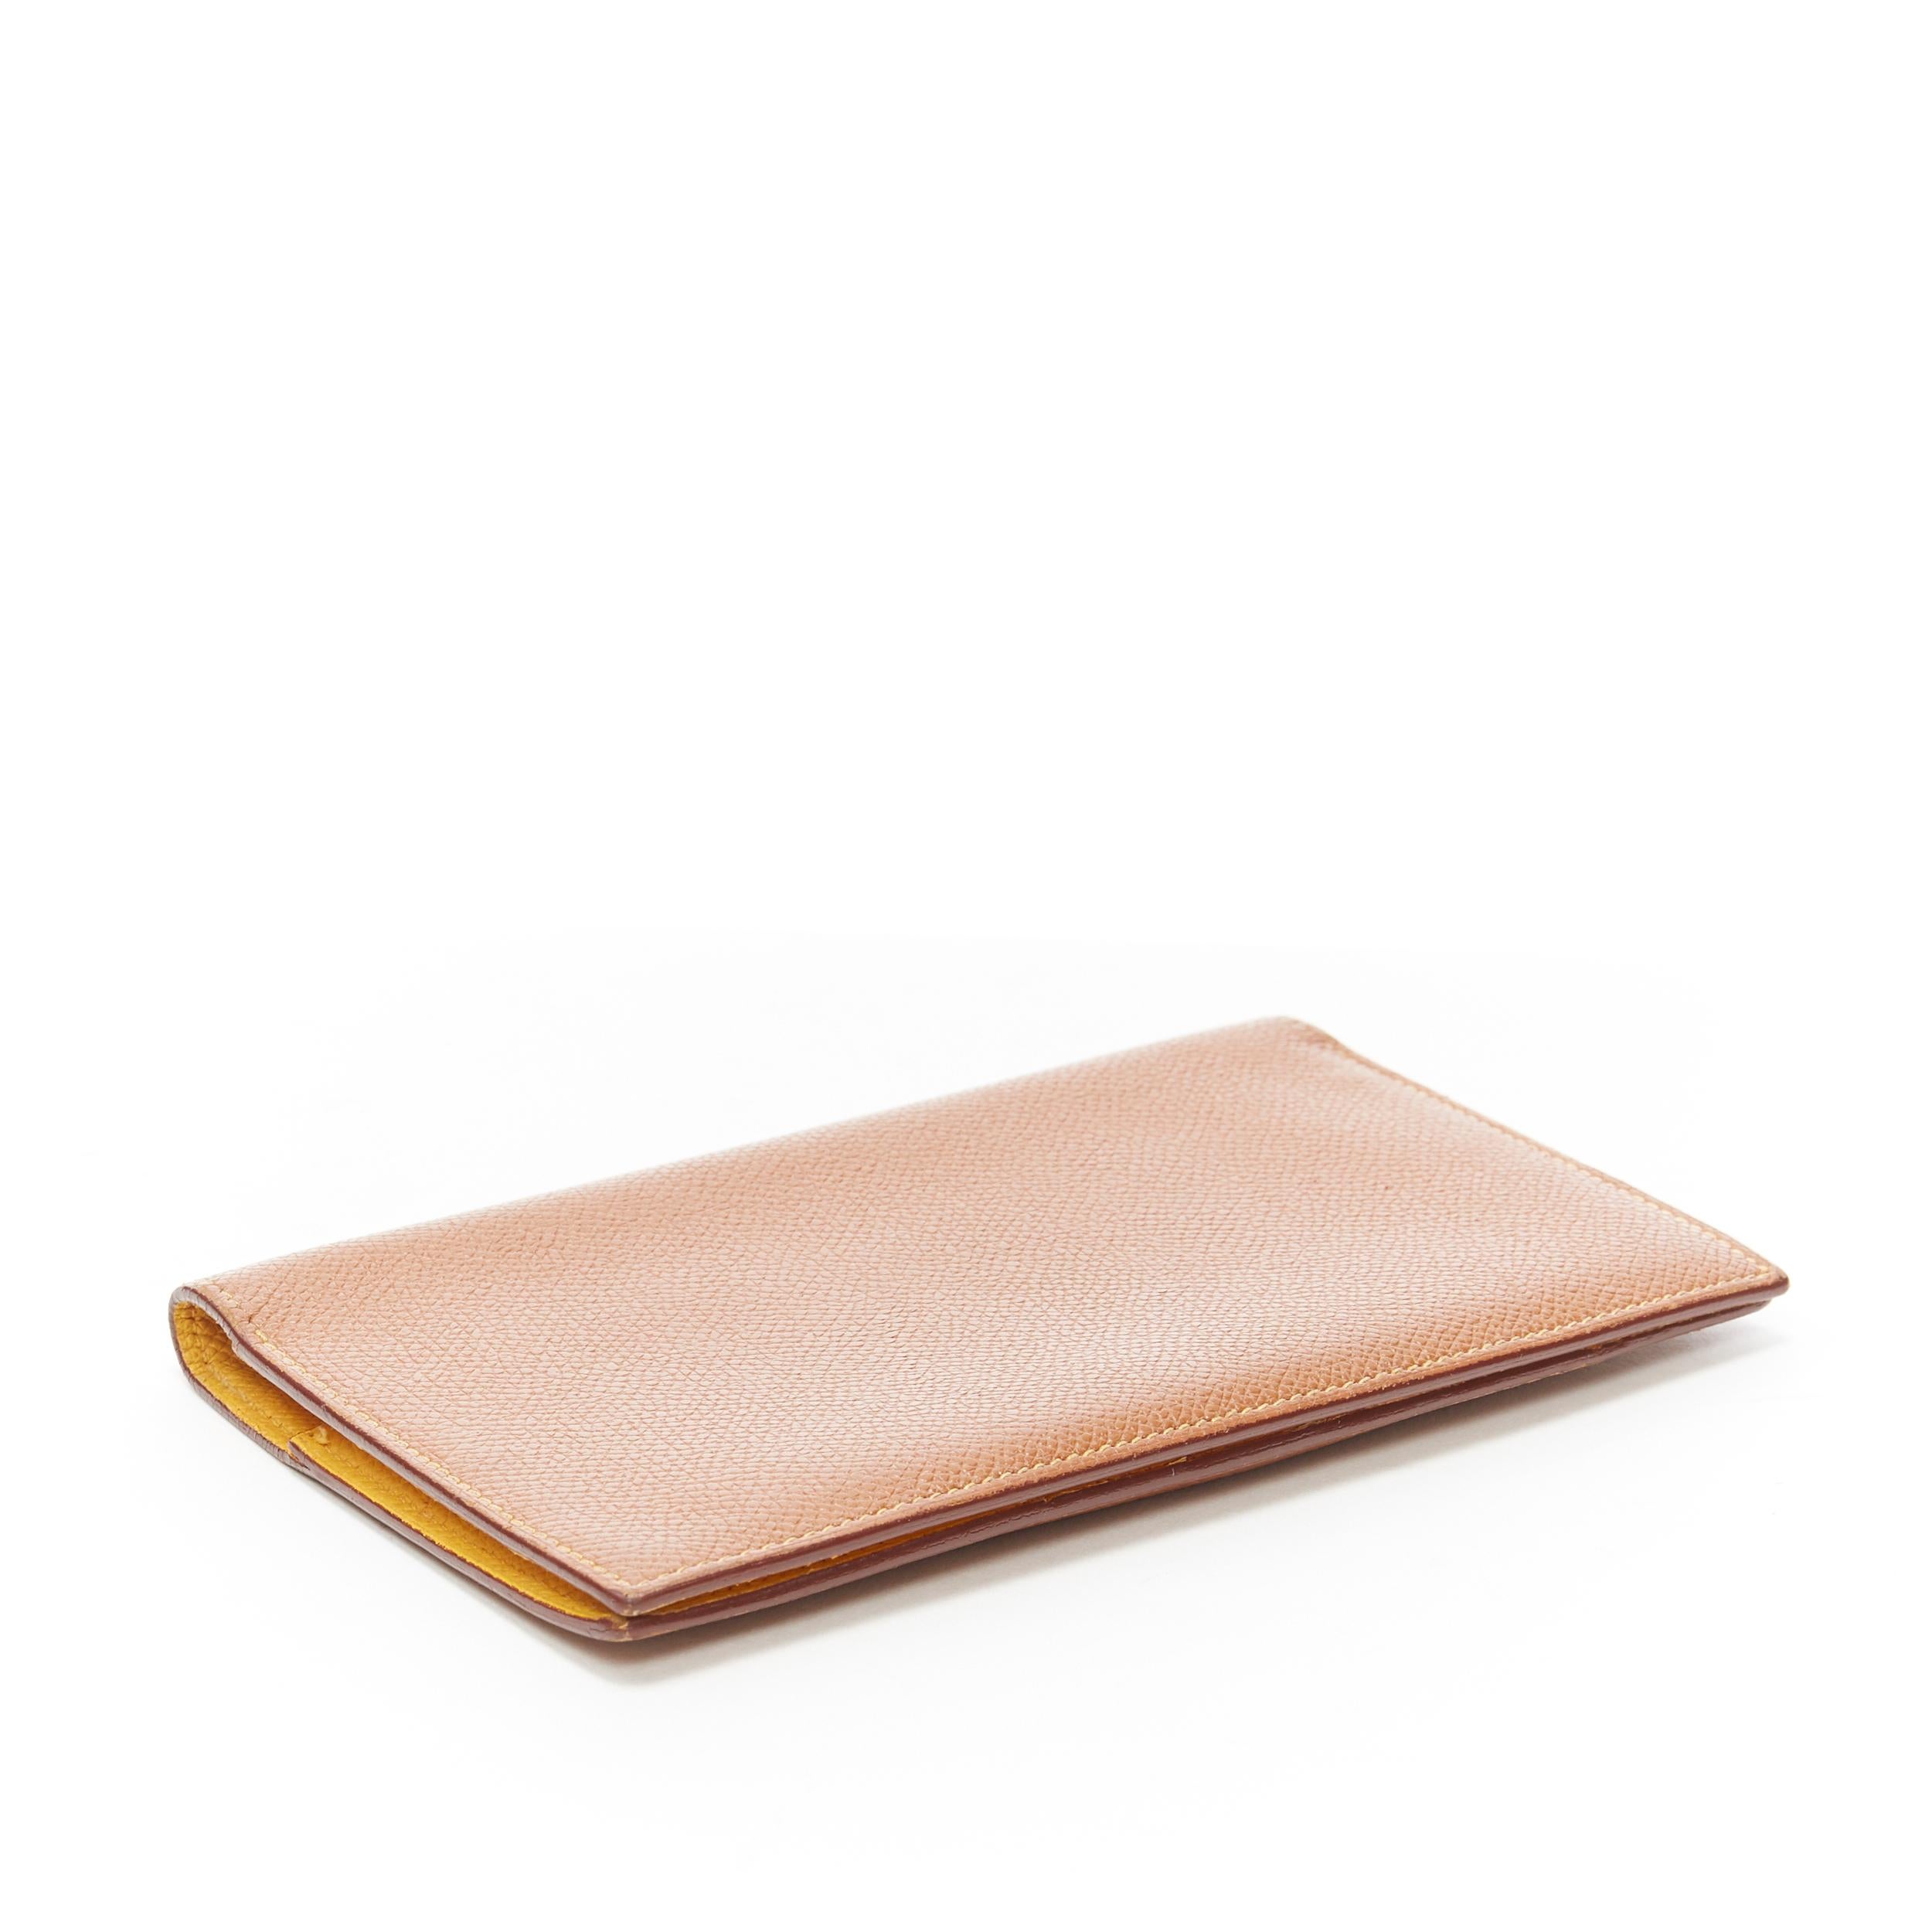 Yellow HERMES tan leather contrast yellow lining minimal long bi fold wallet